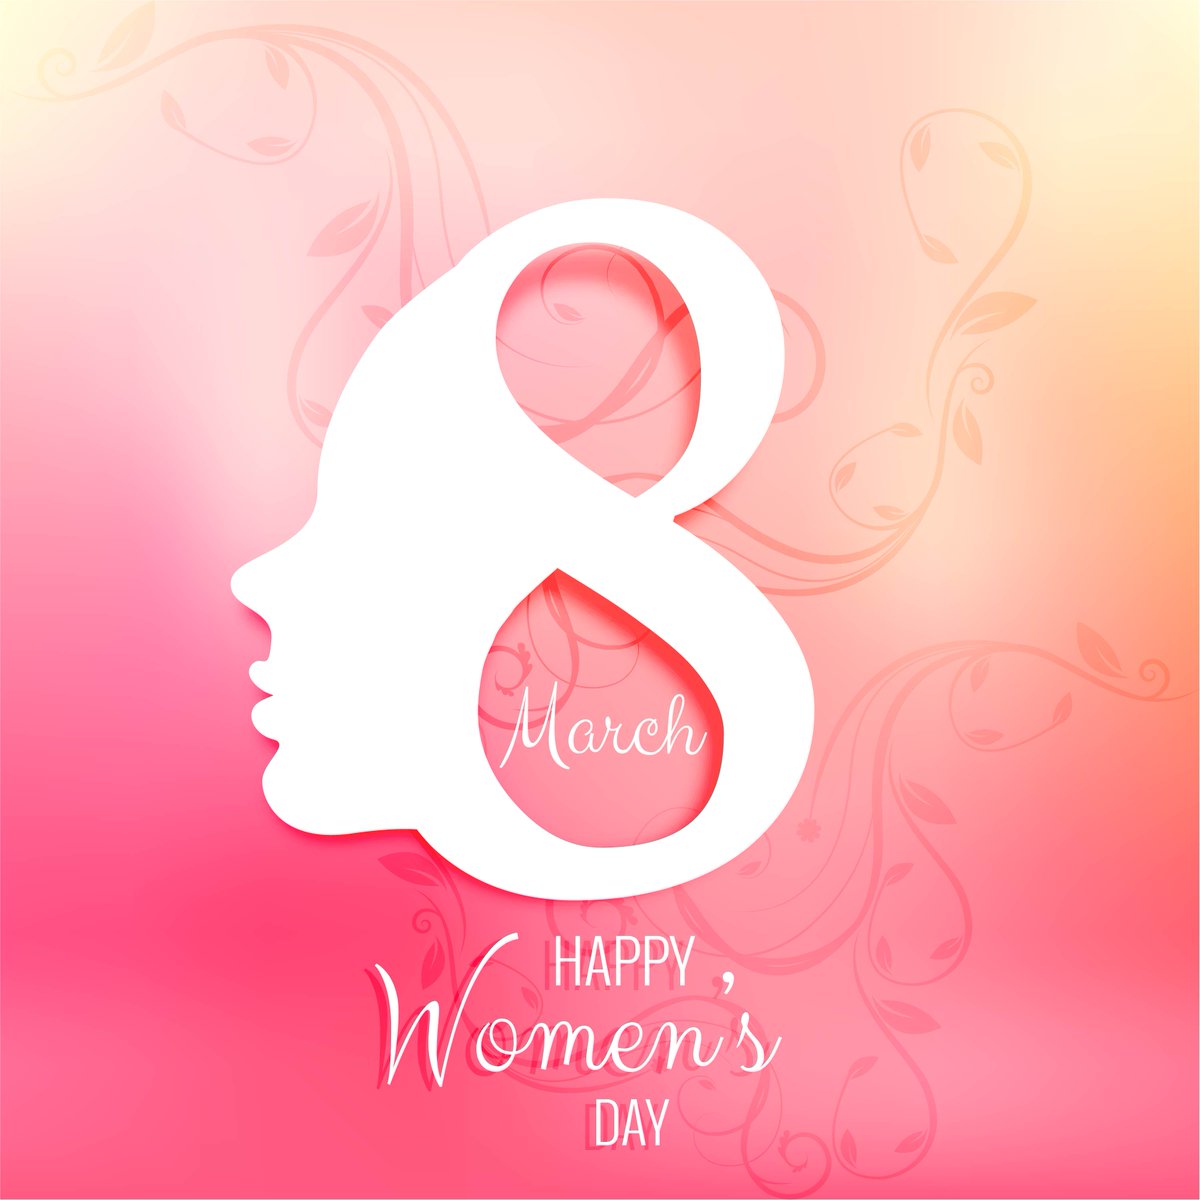 Happy womans day. С международным женским днем. Международный женский день вектор. Плакат International women's Day 8 March.